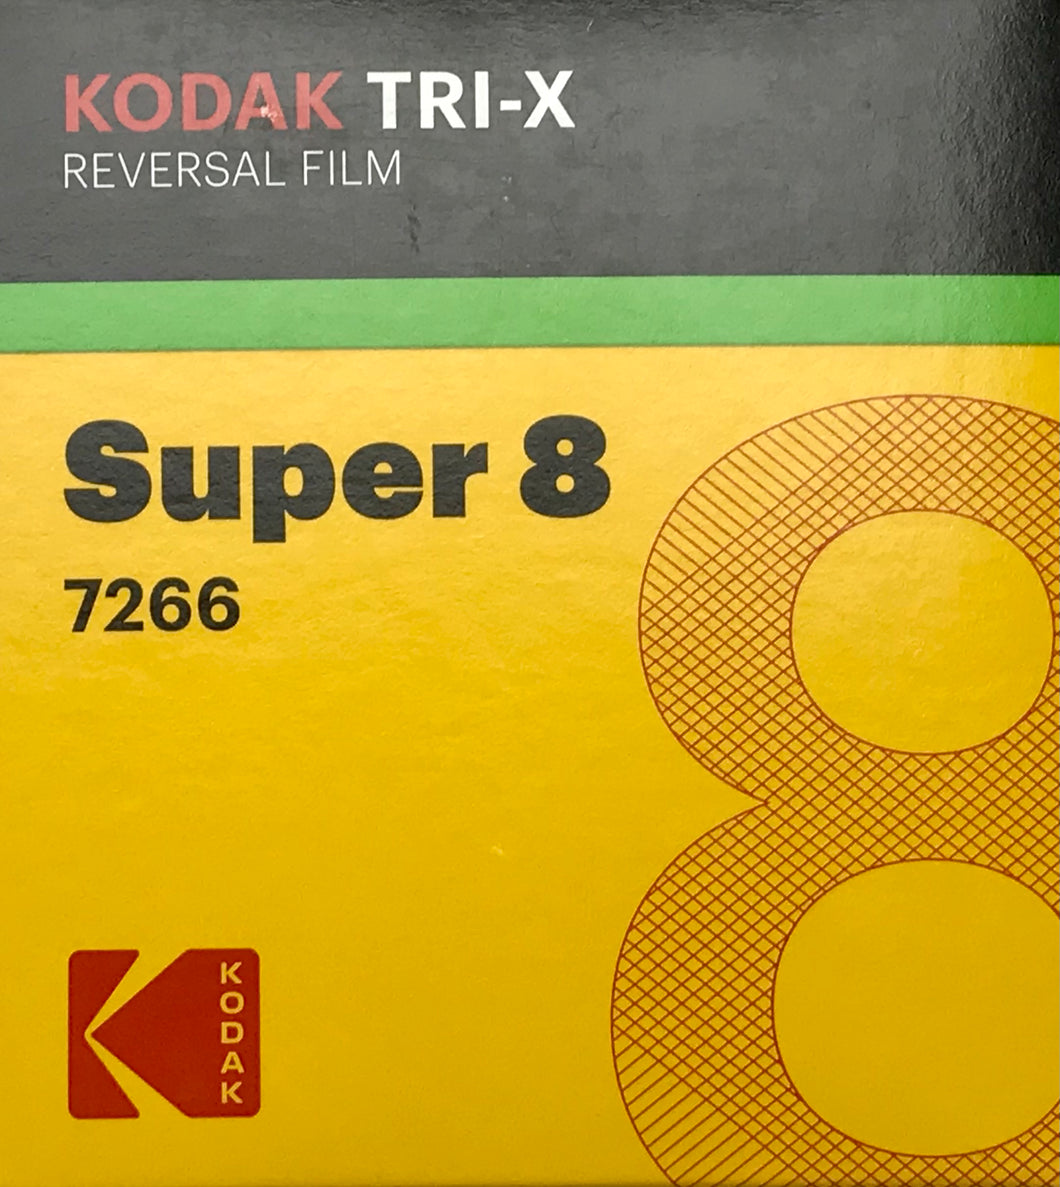 Kodak TRI-X Reversal 7266 for Super 8